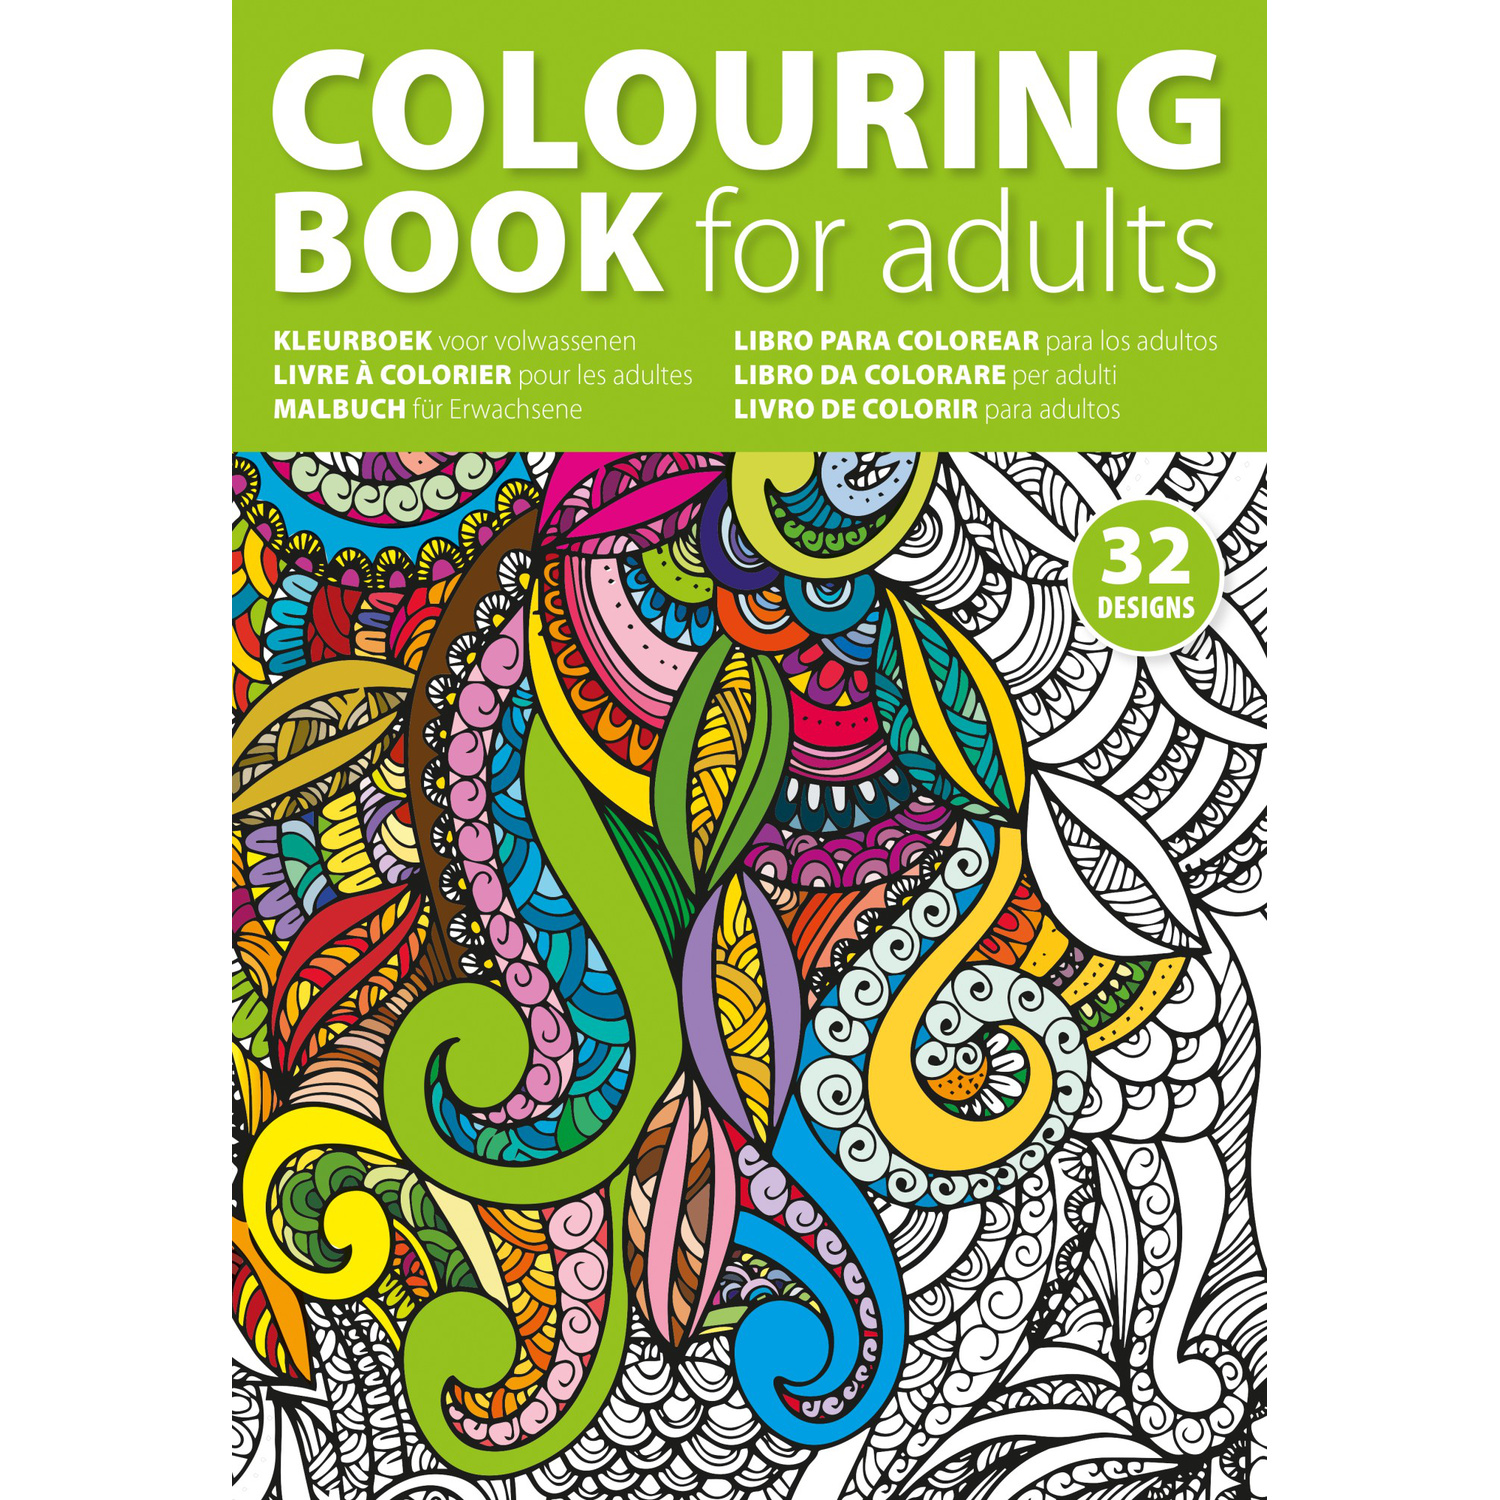 004908 009999999 2d090 frt pro01 fal - Adult's colouring book